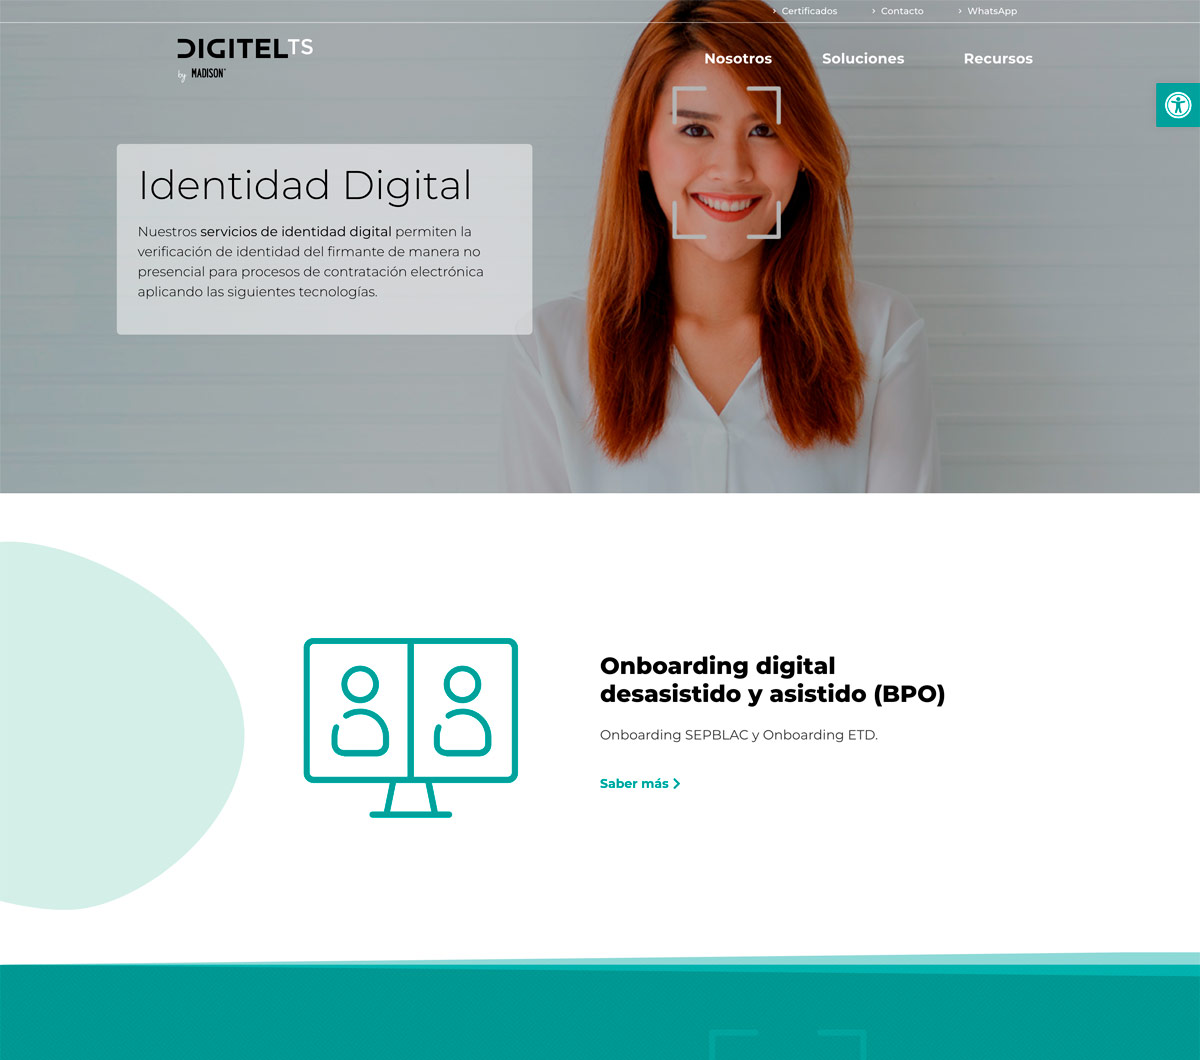 Web DigitelTS - Paginas Soluciones: "Identidad Digital"